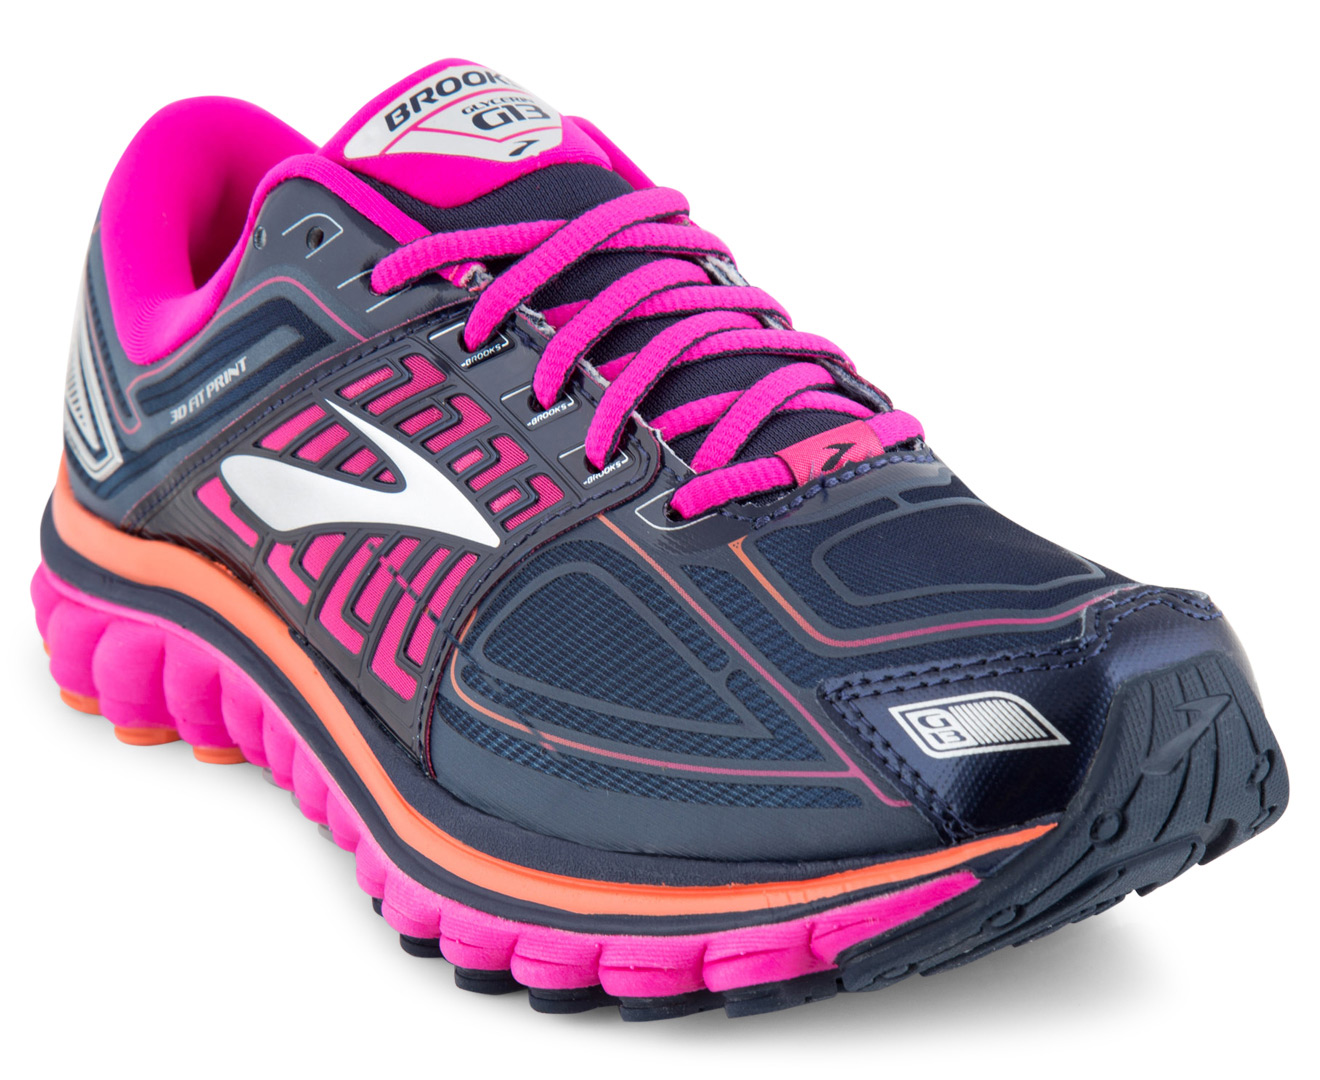 Brooks Women's Glycerin 13 Shoe - Peacoat/Pink Glow/Coral | Catch.com.au